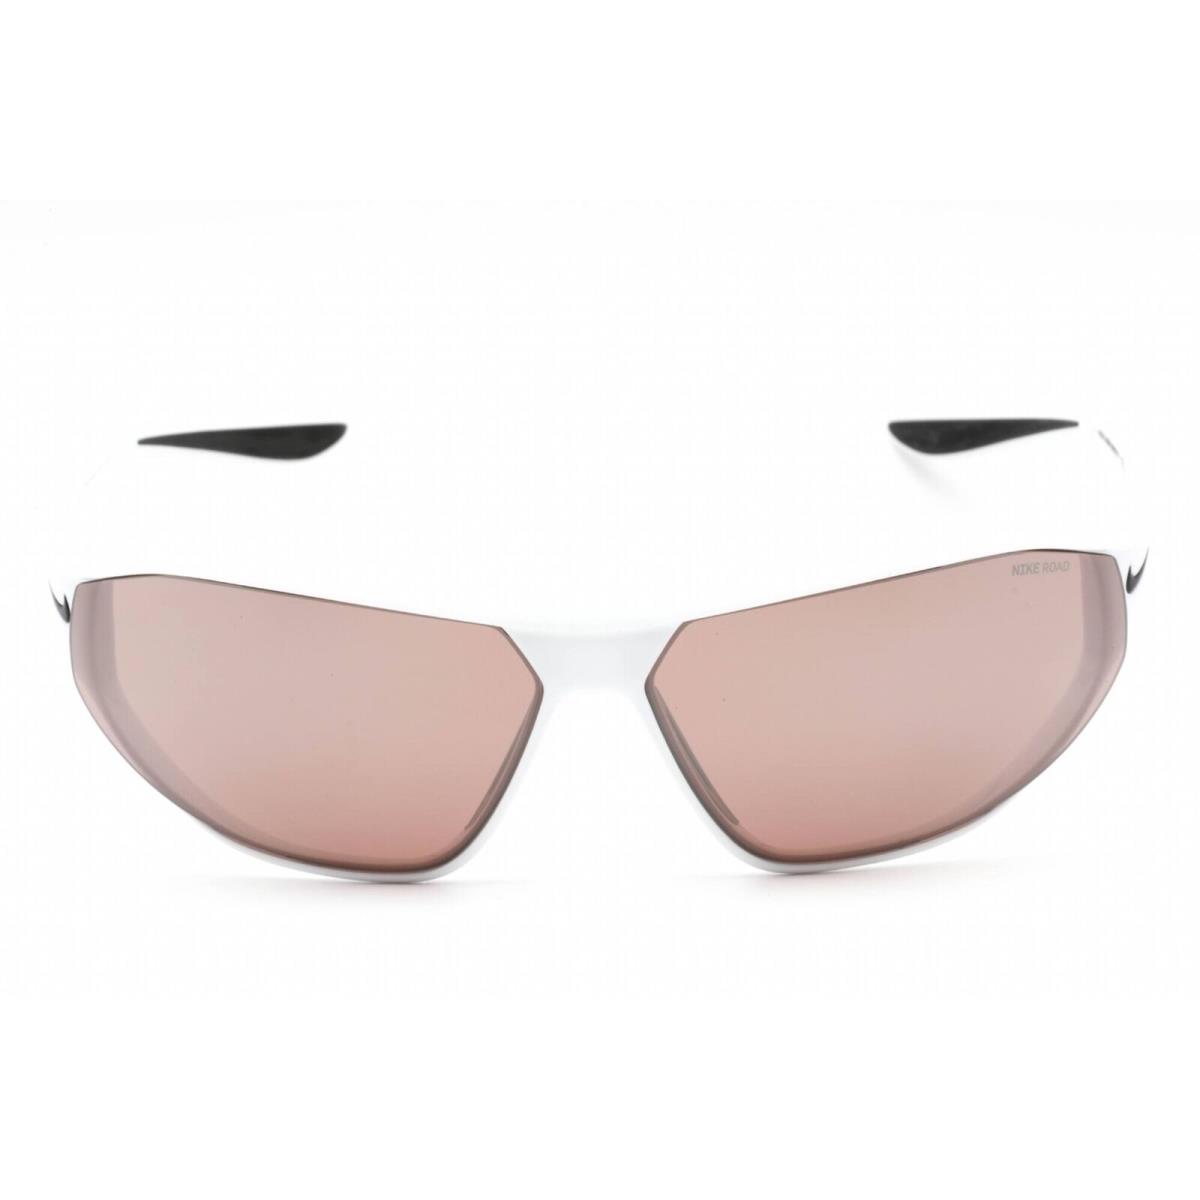 Nike Unisex Sunglasses White Frame Road Tint Lens Nike Aero Swift E DQ0992 100